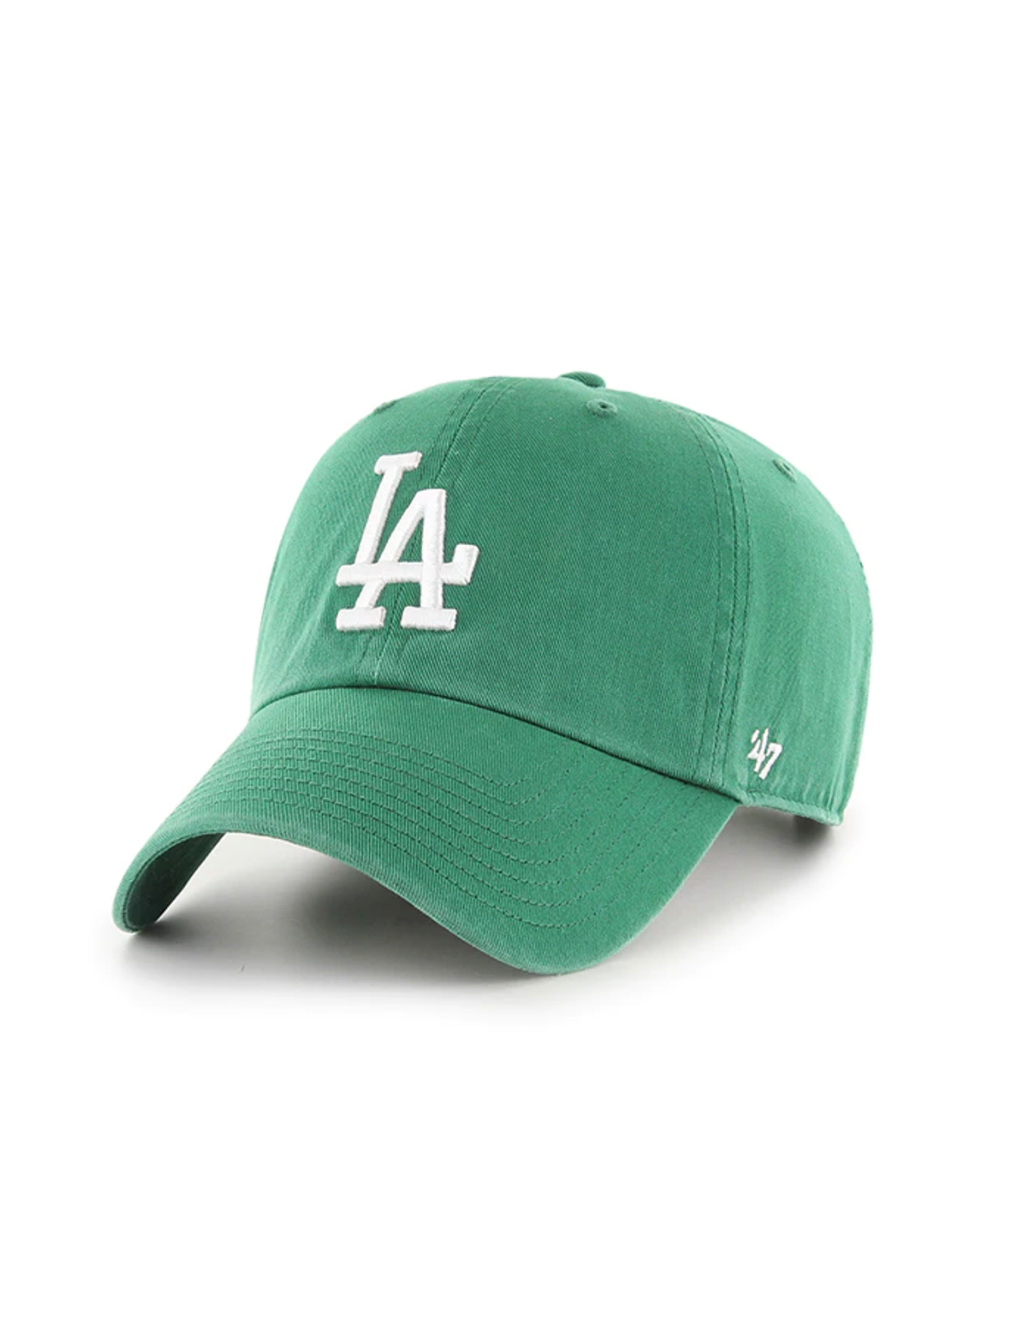 LA Dodgers Basic Ball Cap, Kelly Green/White